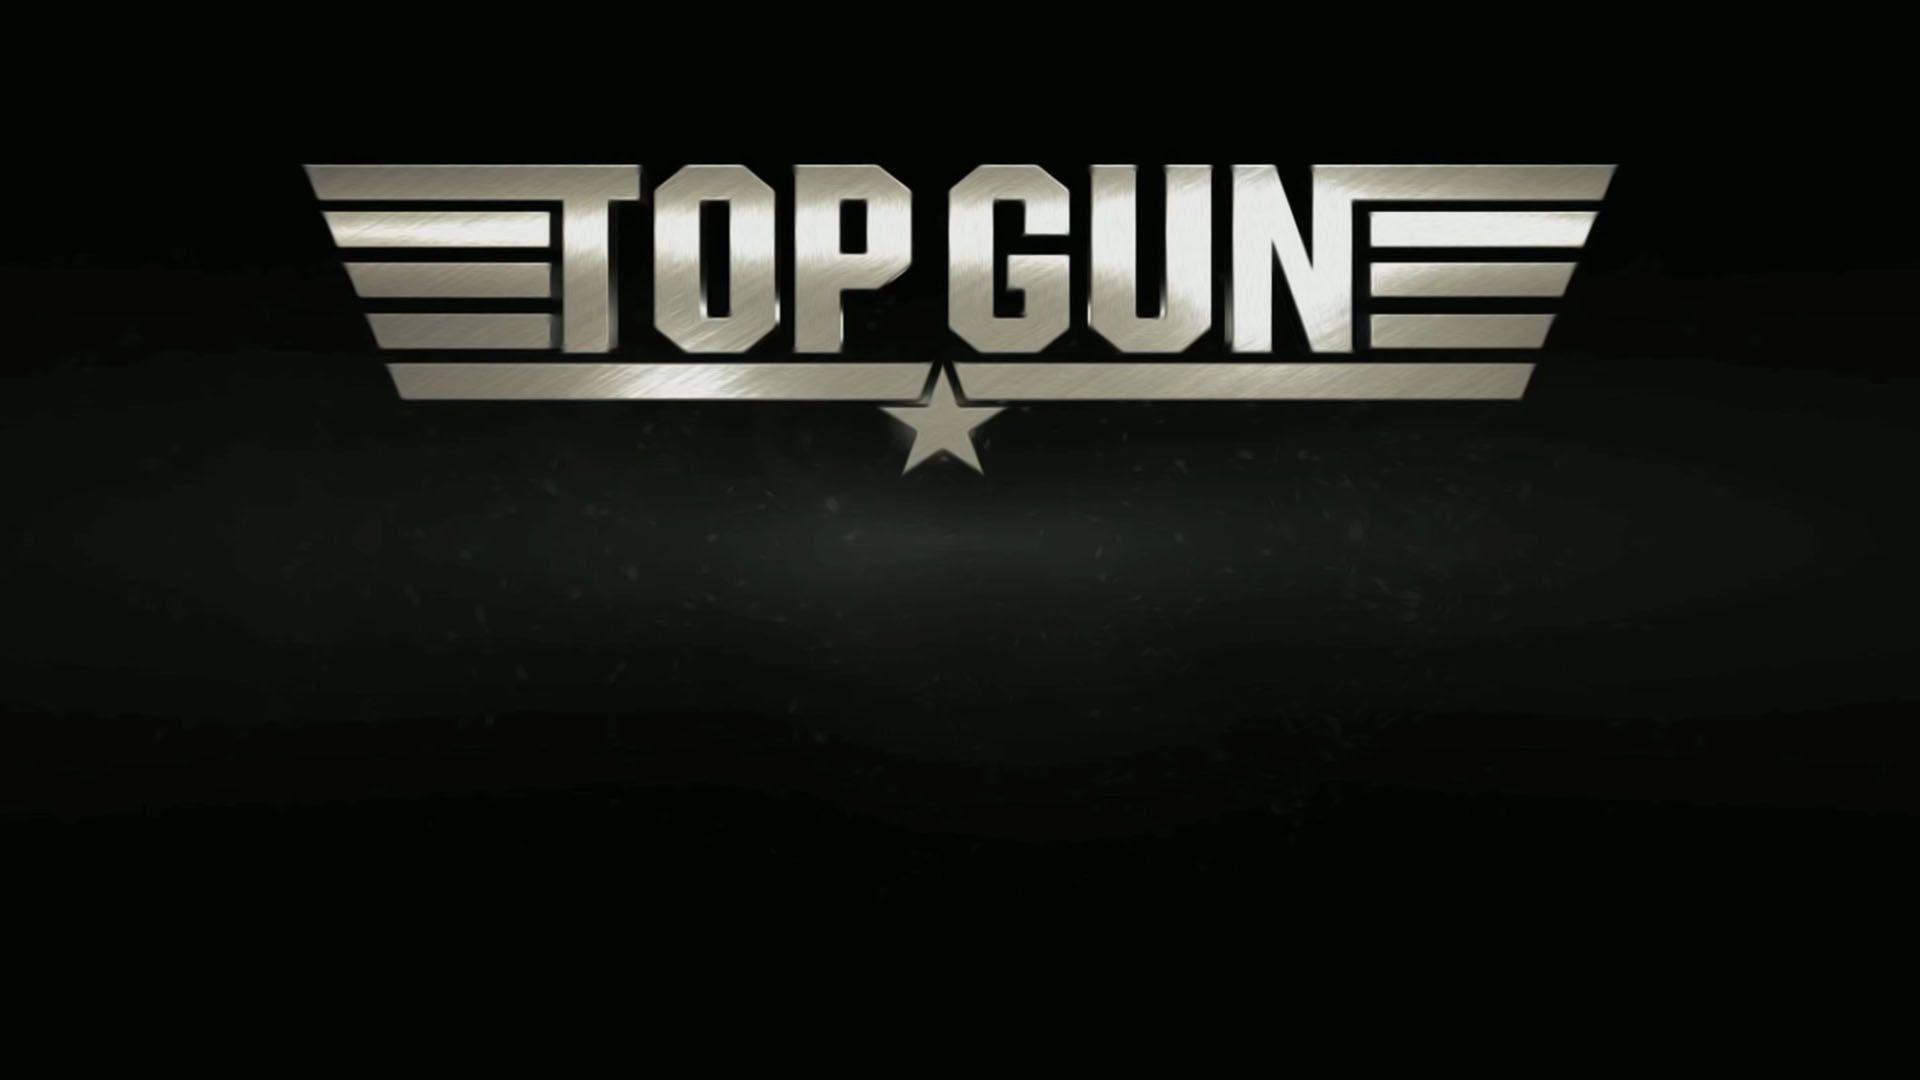 Top Gun 3D. Free Desktop Wallpaper for Widescreen, HD and Mobile